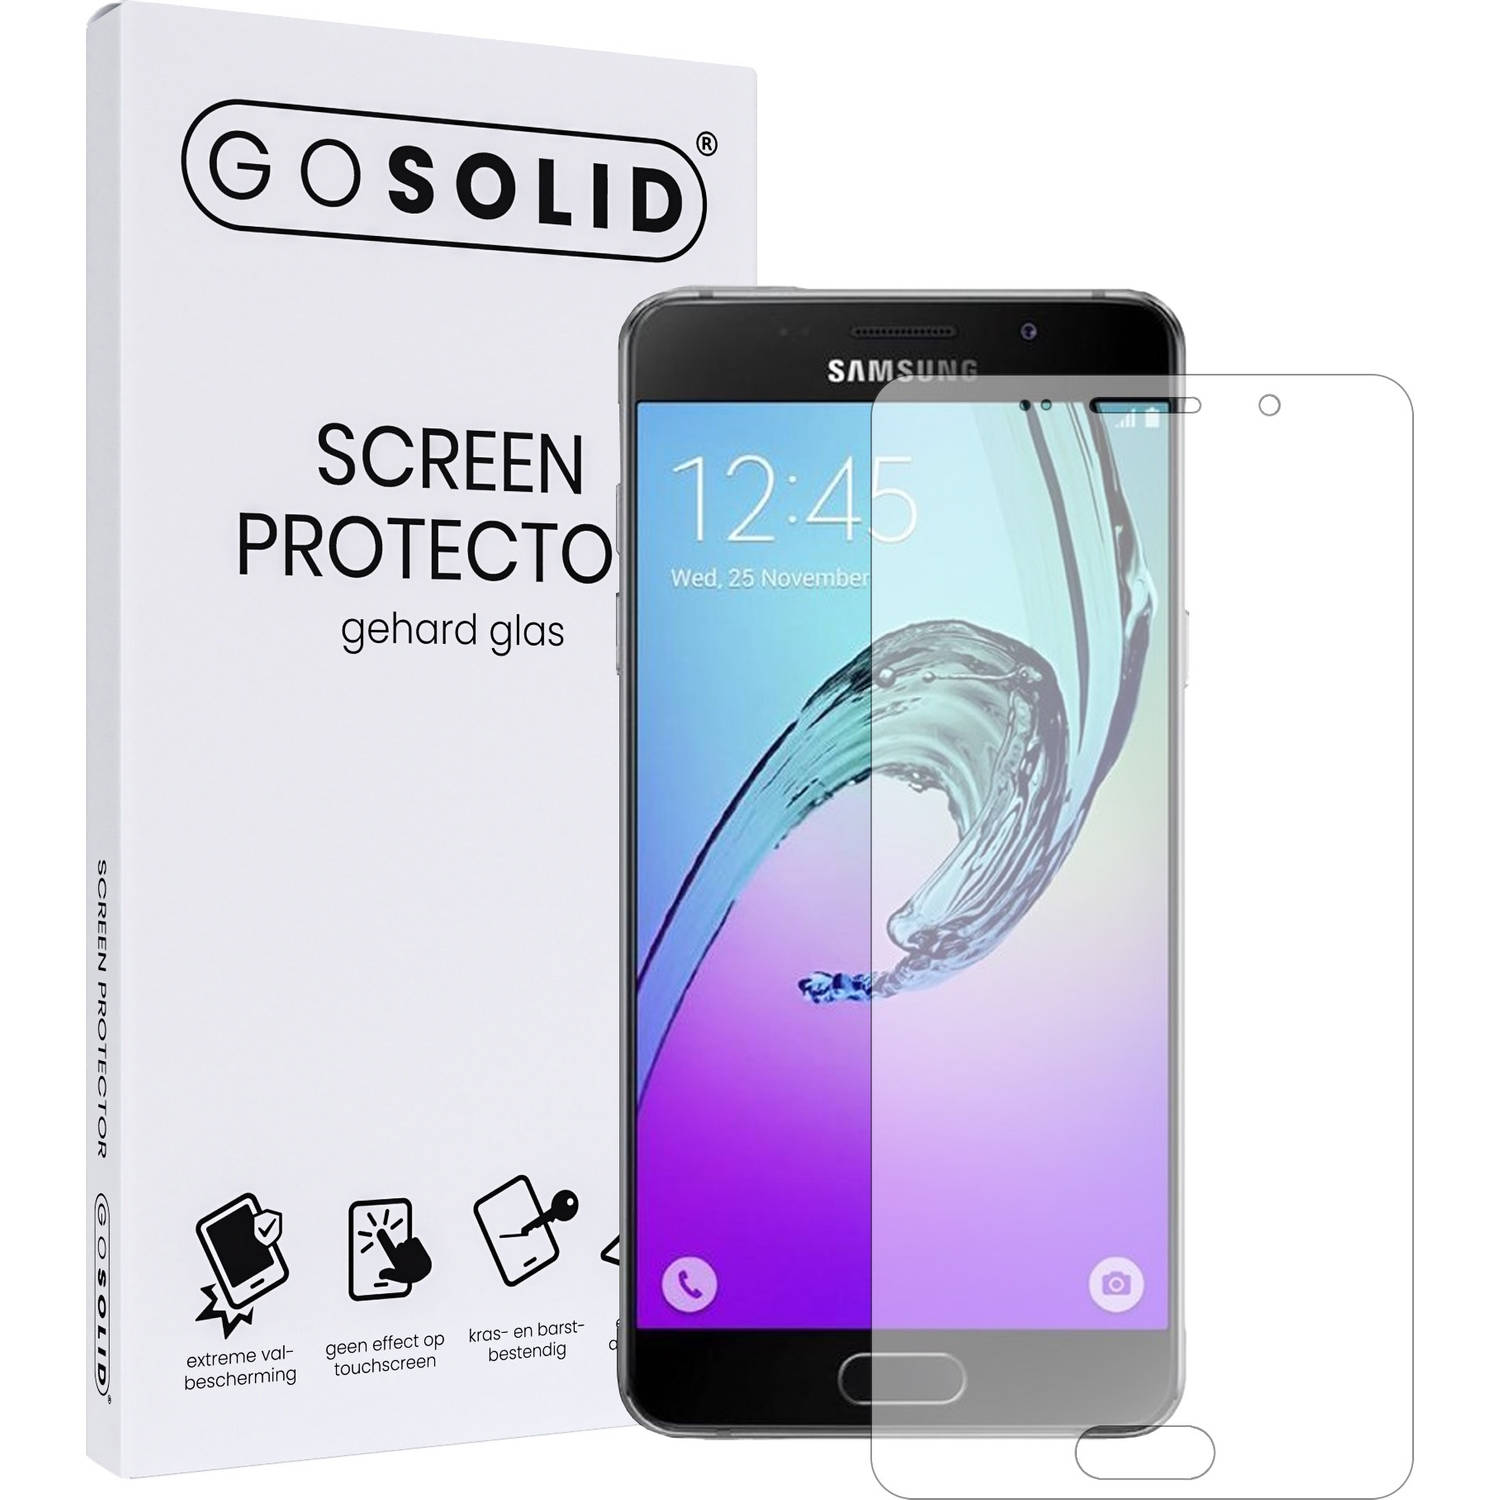 GO SOLID! ® Screenprotector Samsung Galaxy A5 2016 - gehard glas